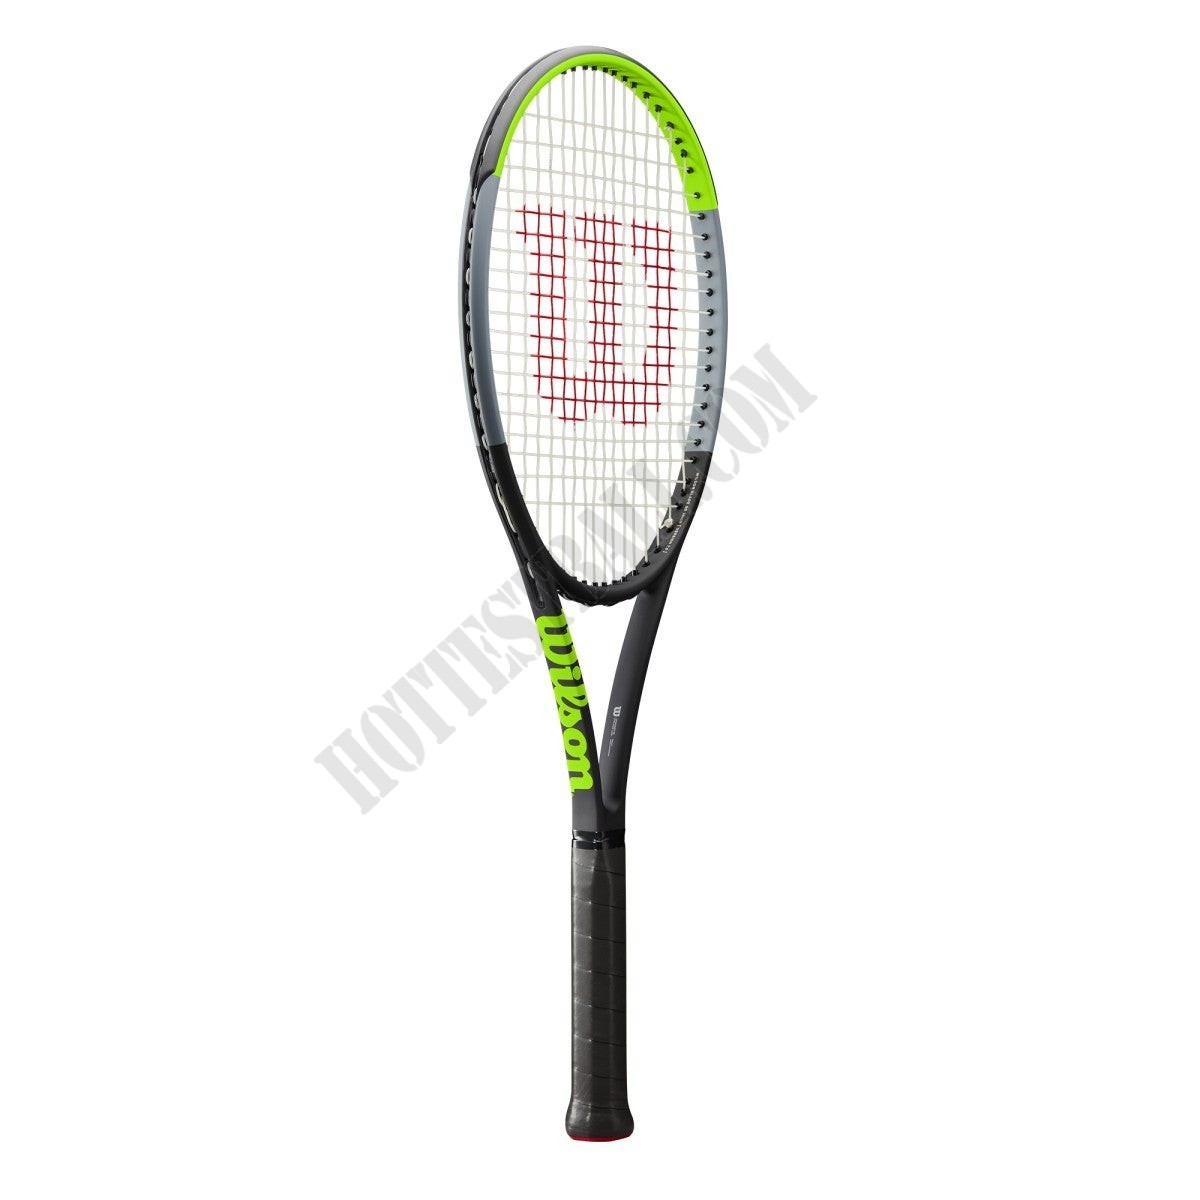 Blade 98 16x19 V7 Tennis Racket - Wilson Discount Store - Blade 98 16x19 V7 Tennis Racket - Wilson Discount Store